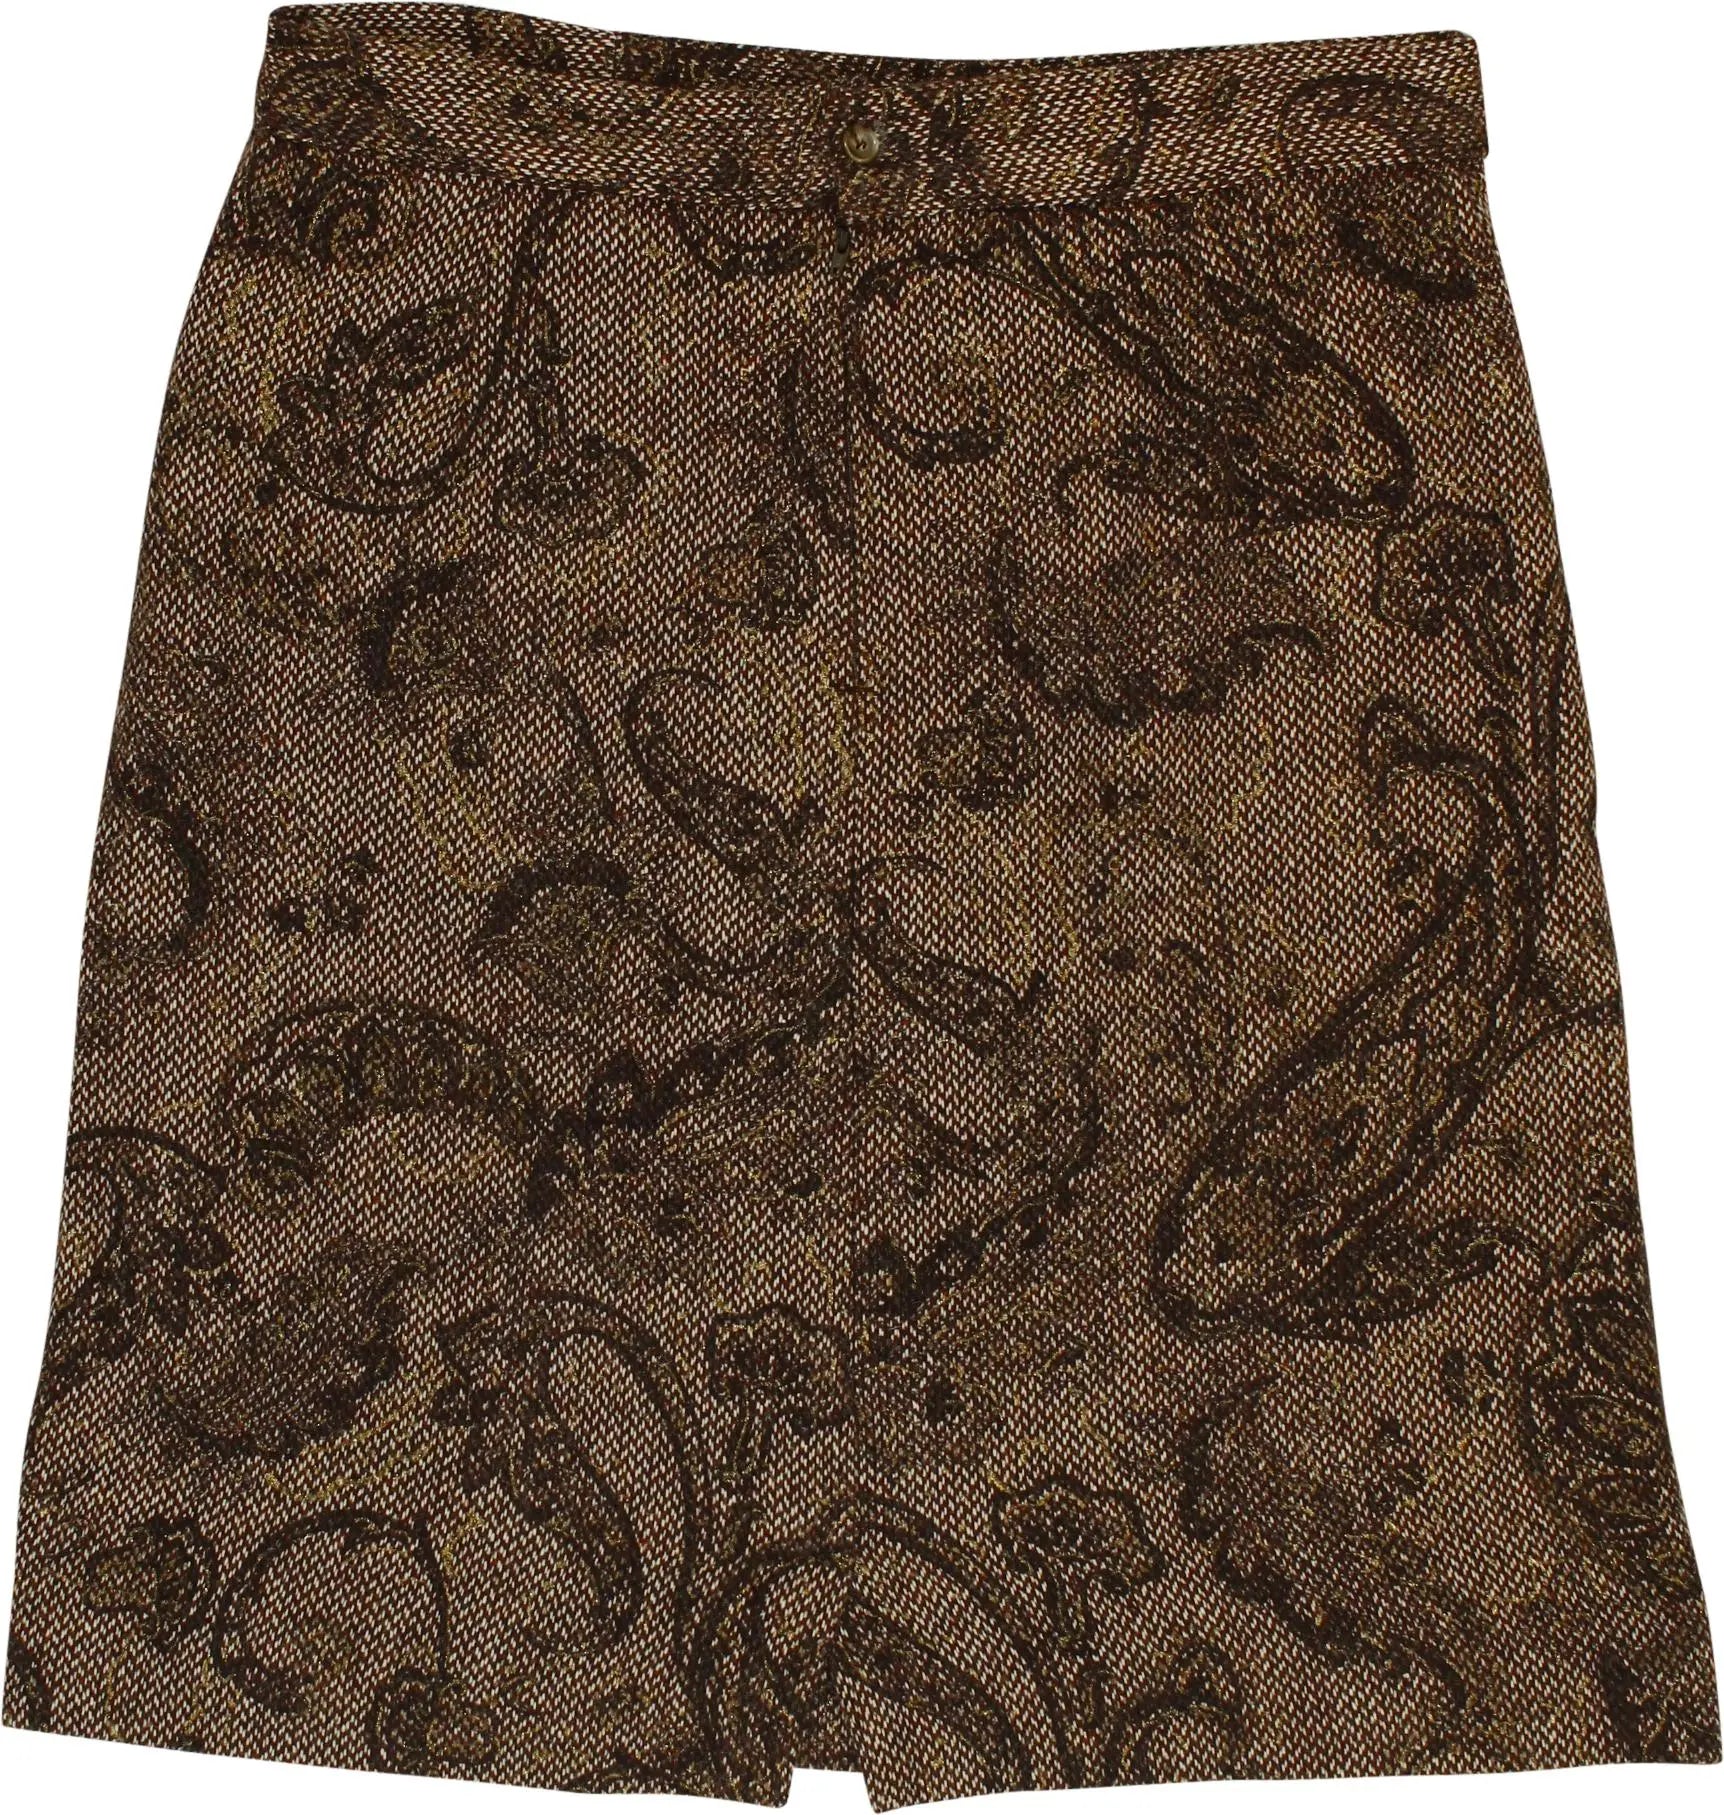 Handmade - Handmade Skirt- ThriftTale.com - Vintage and second handclothing